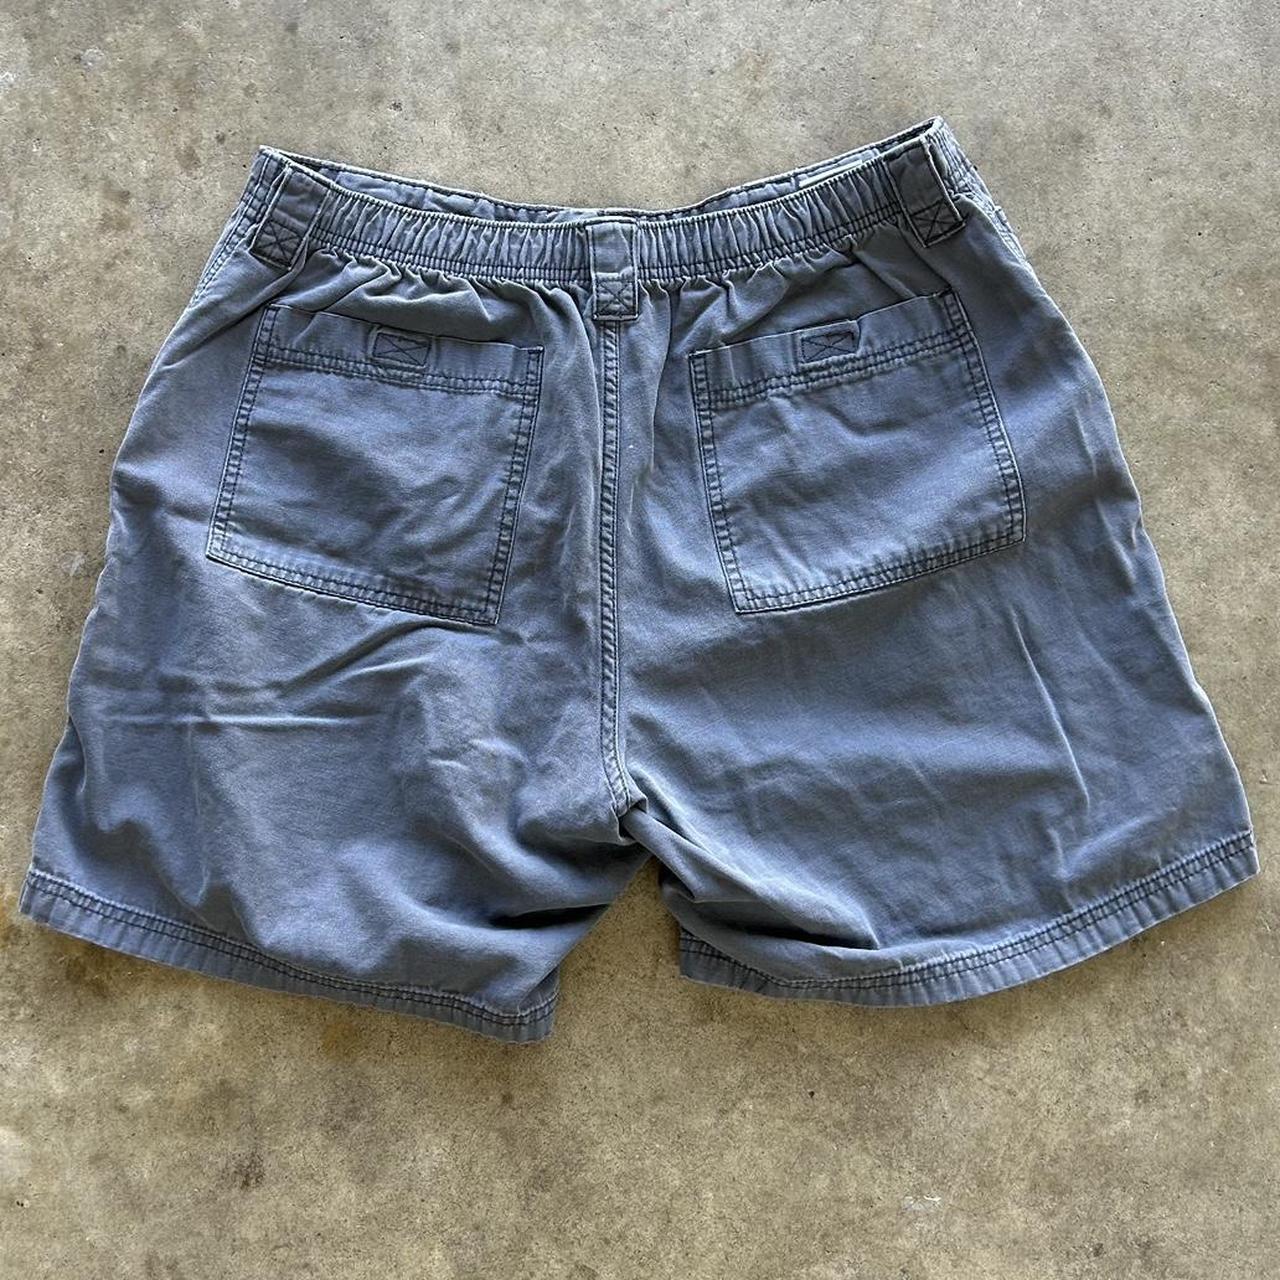 Vintage wrangler front pocket cargo shorts size 36